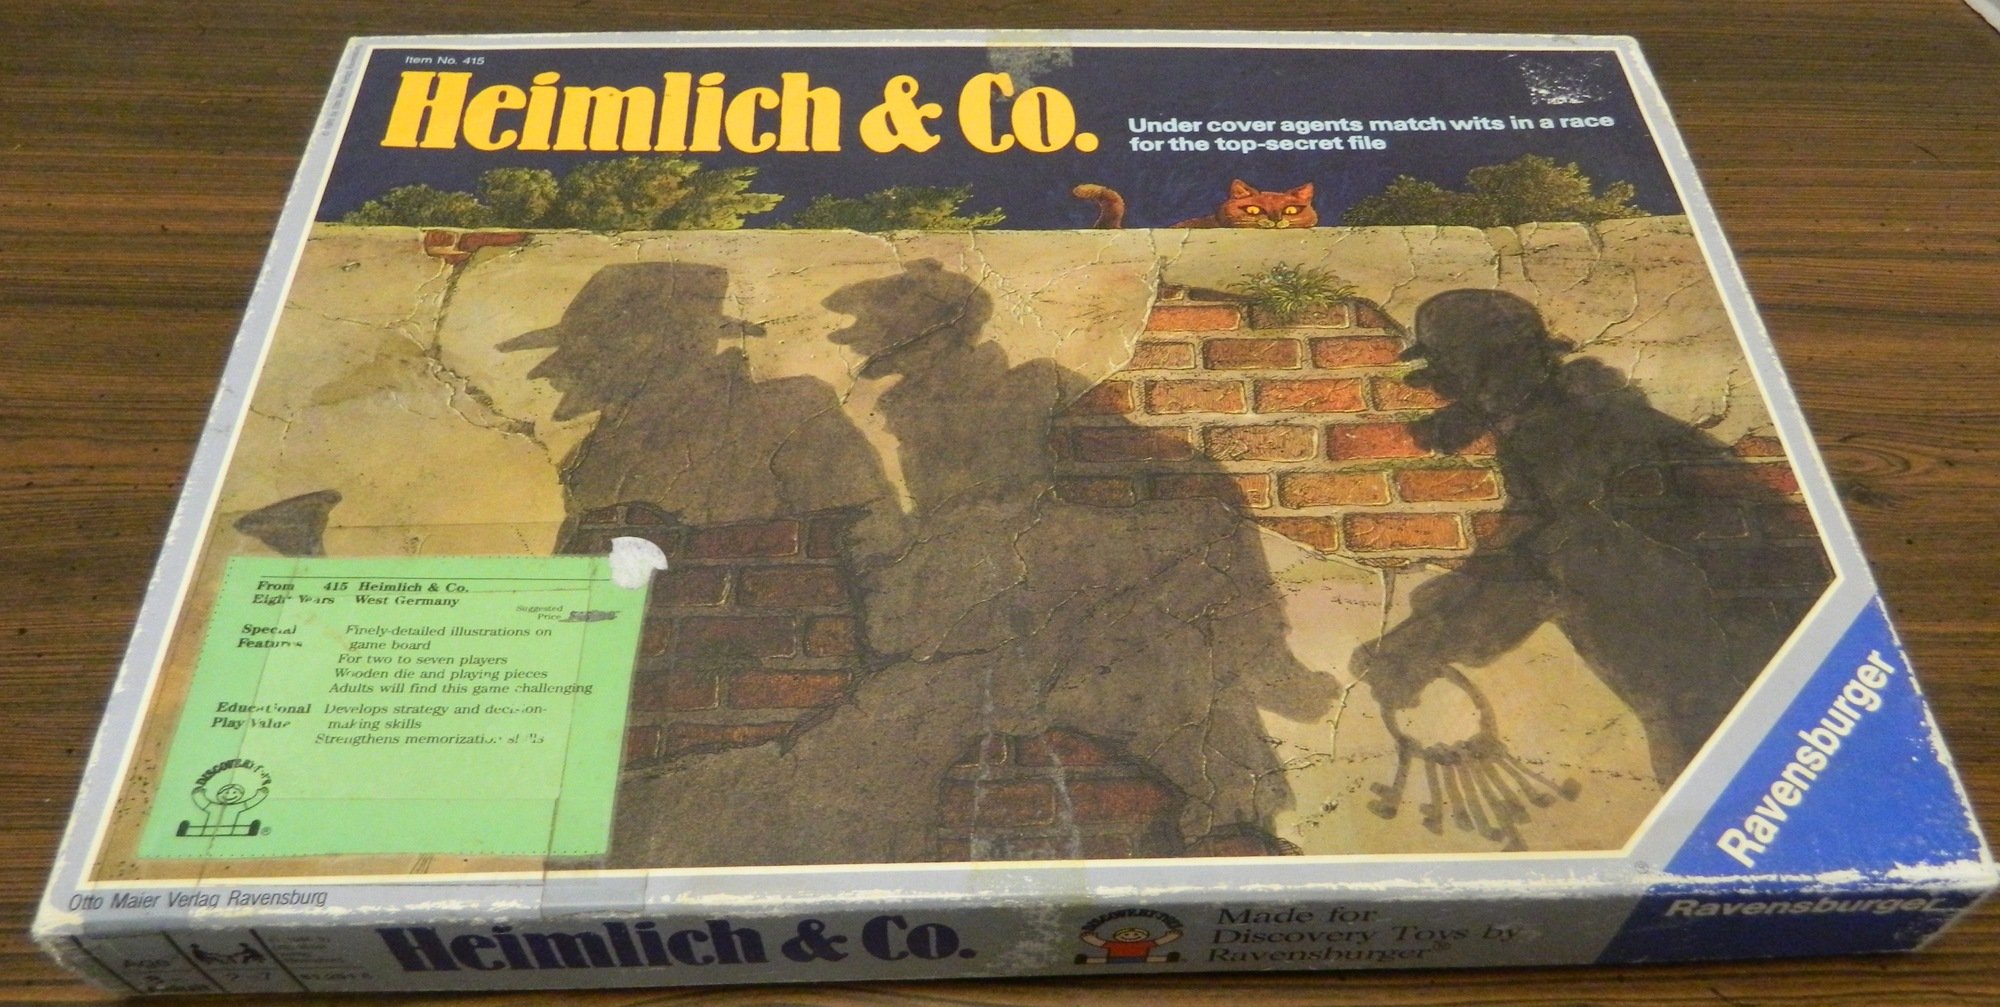 Box for Heimlich & Co